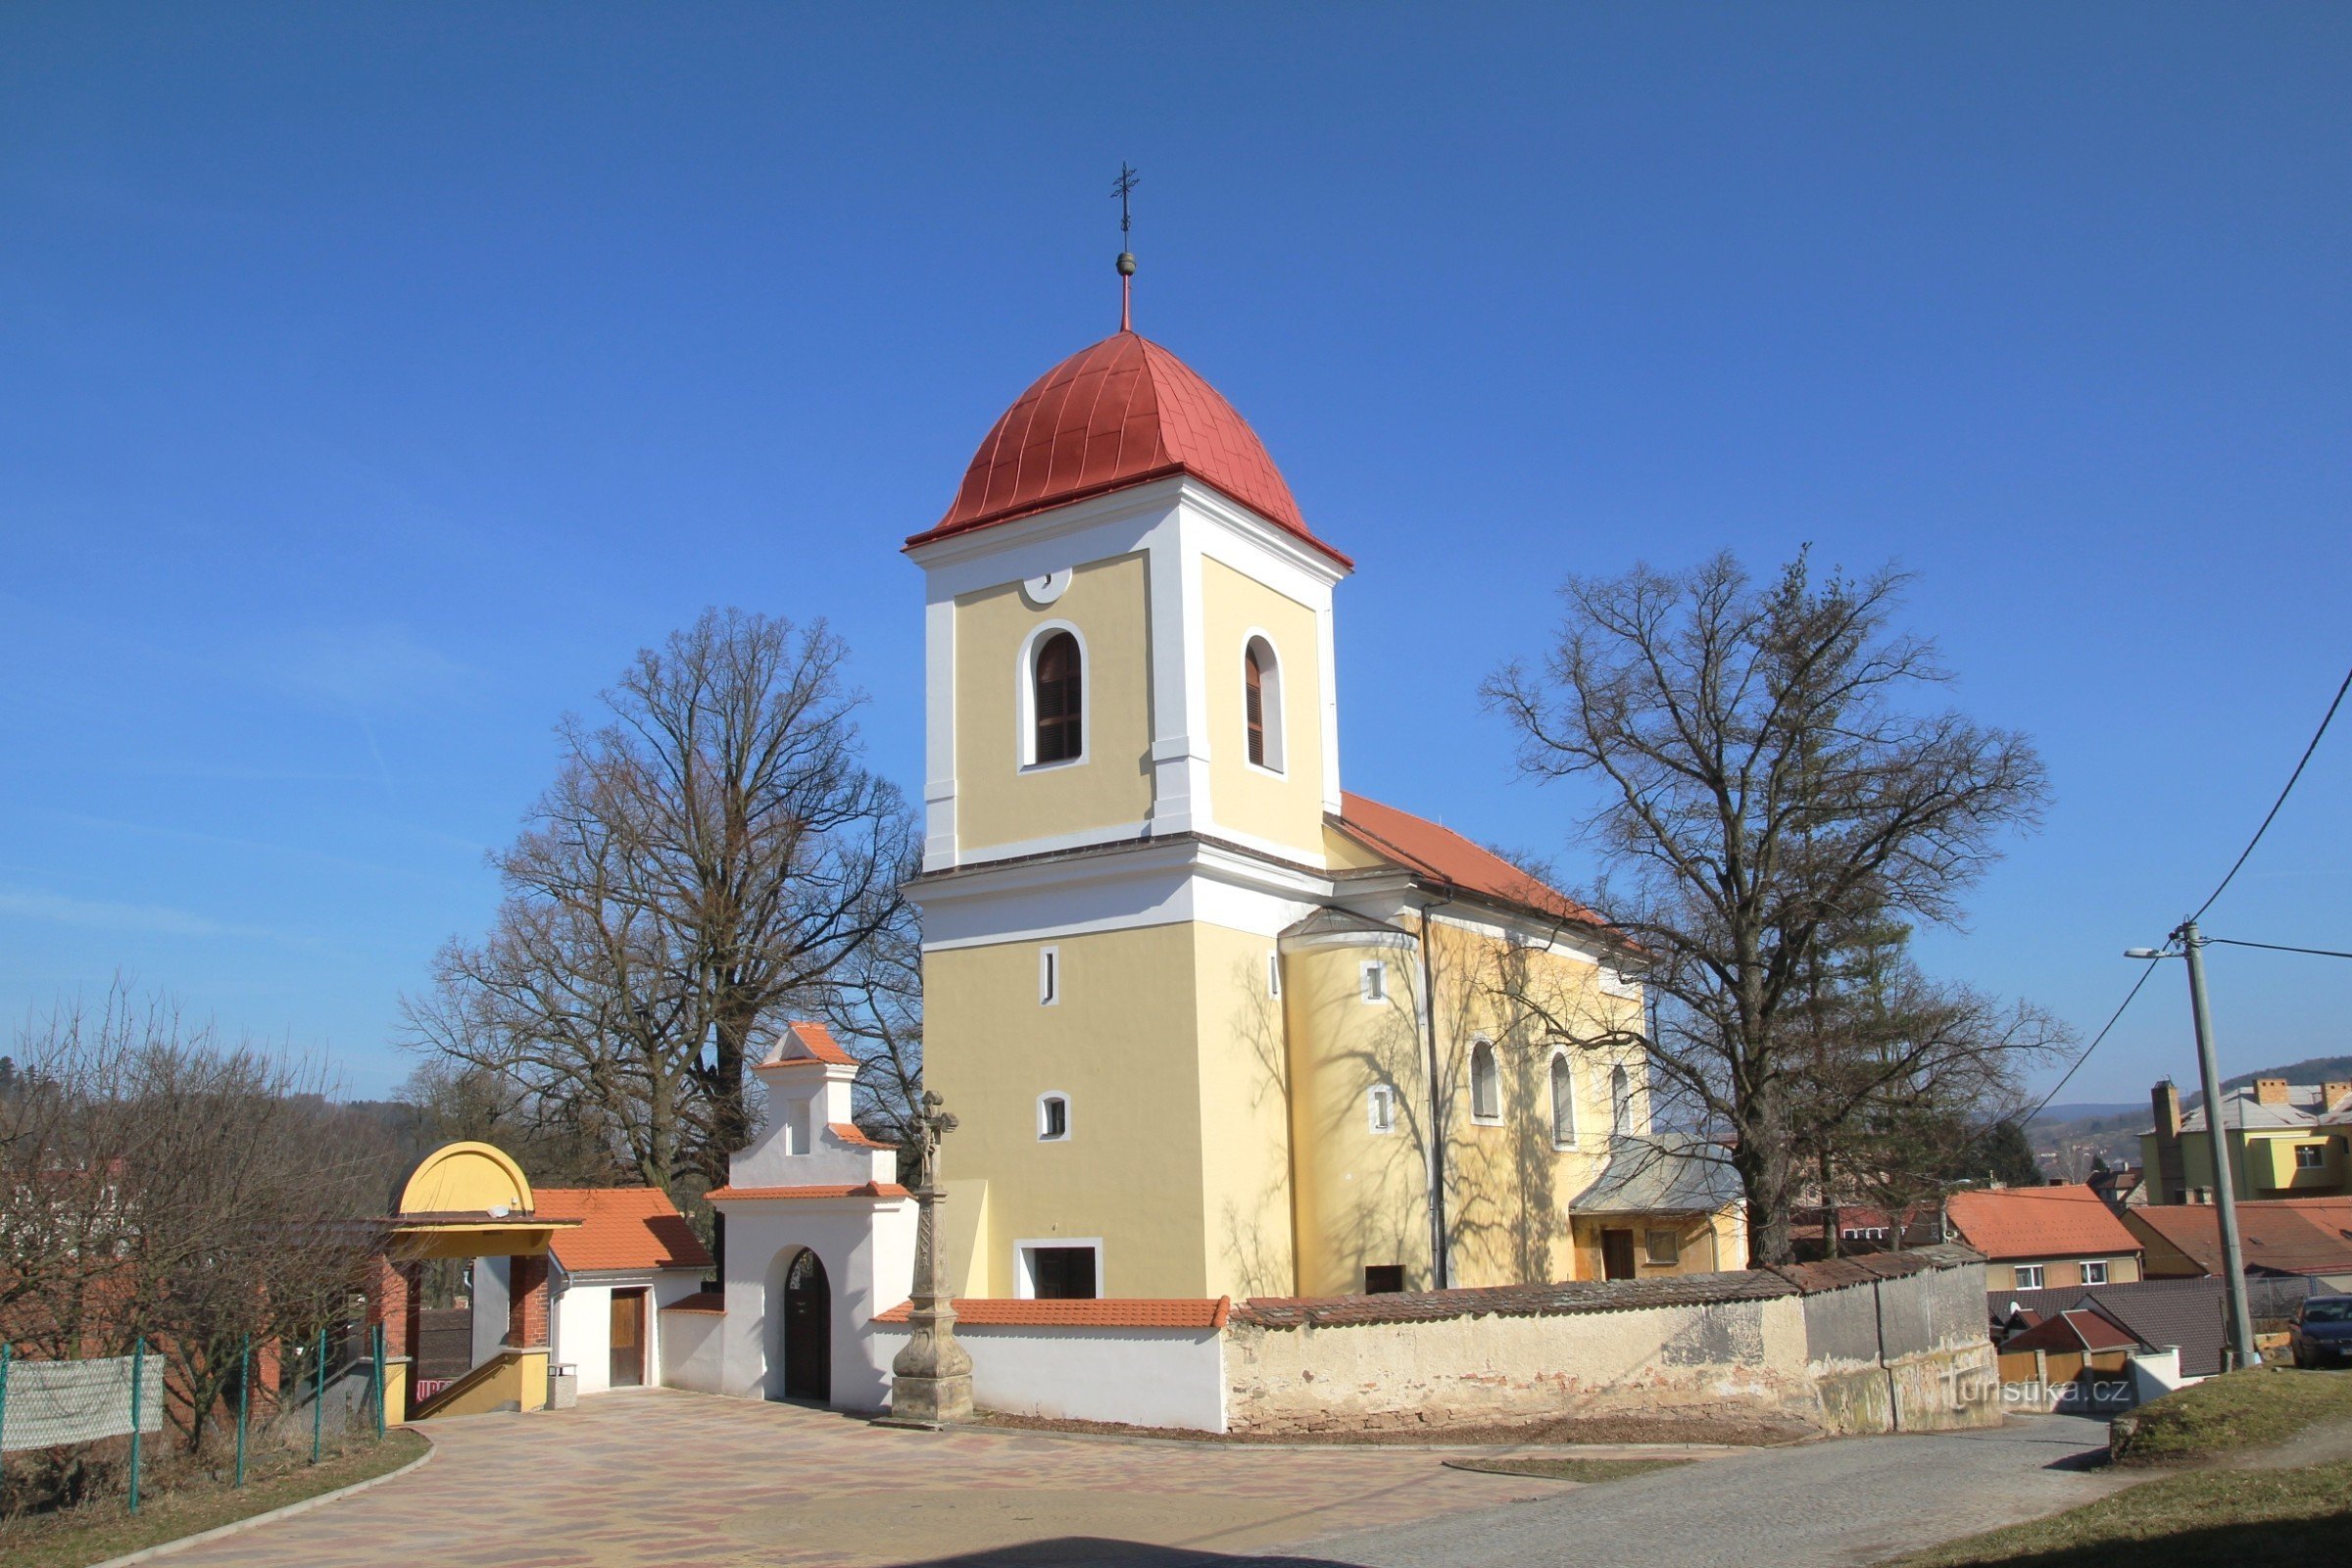 Svitavka - Iglesia de St. Juan el Bautista